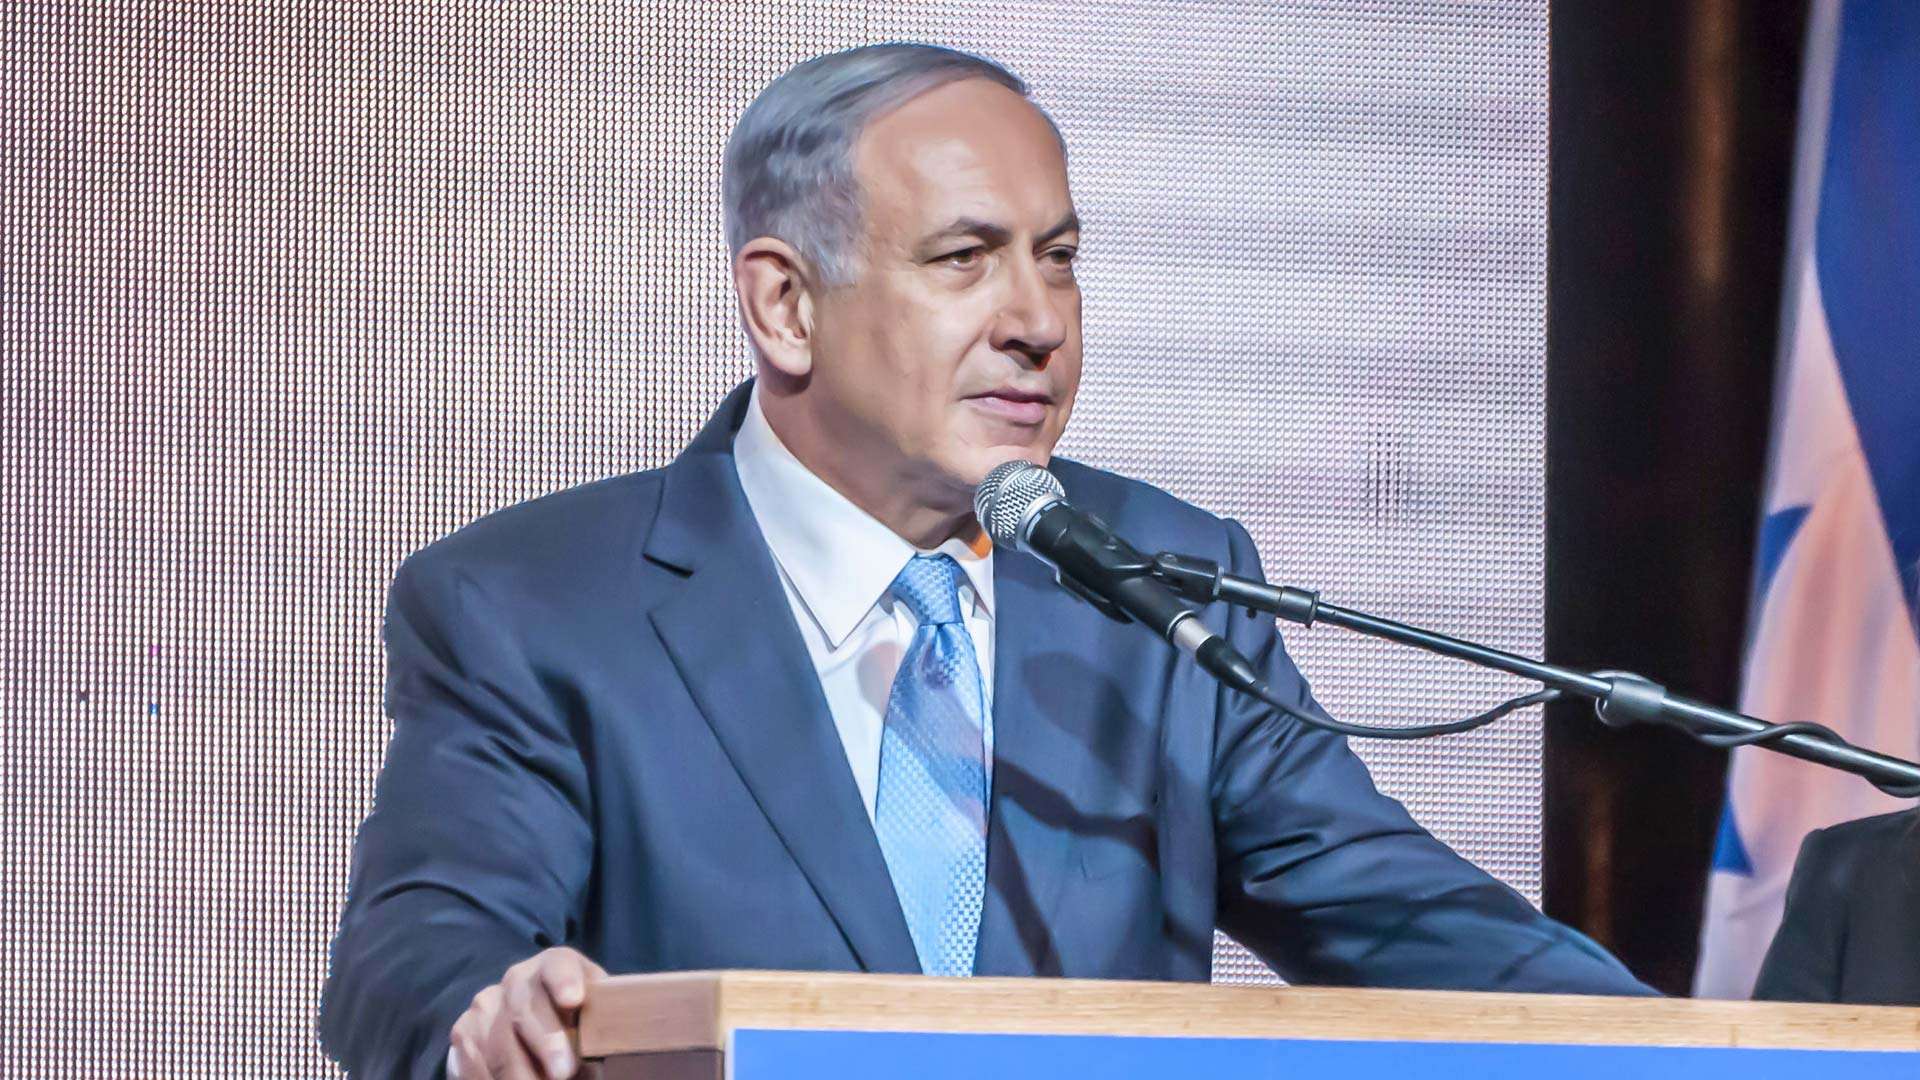 Two Sides of Netanyahu